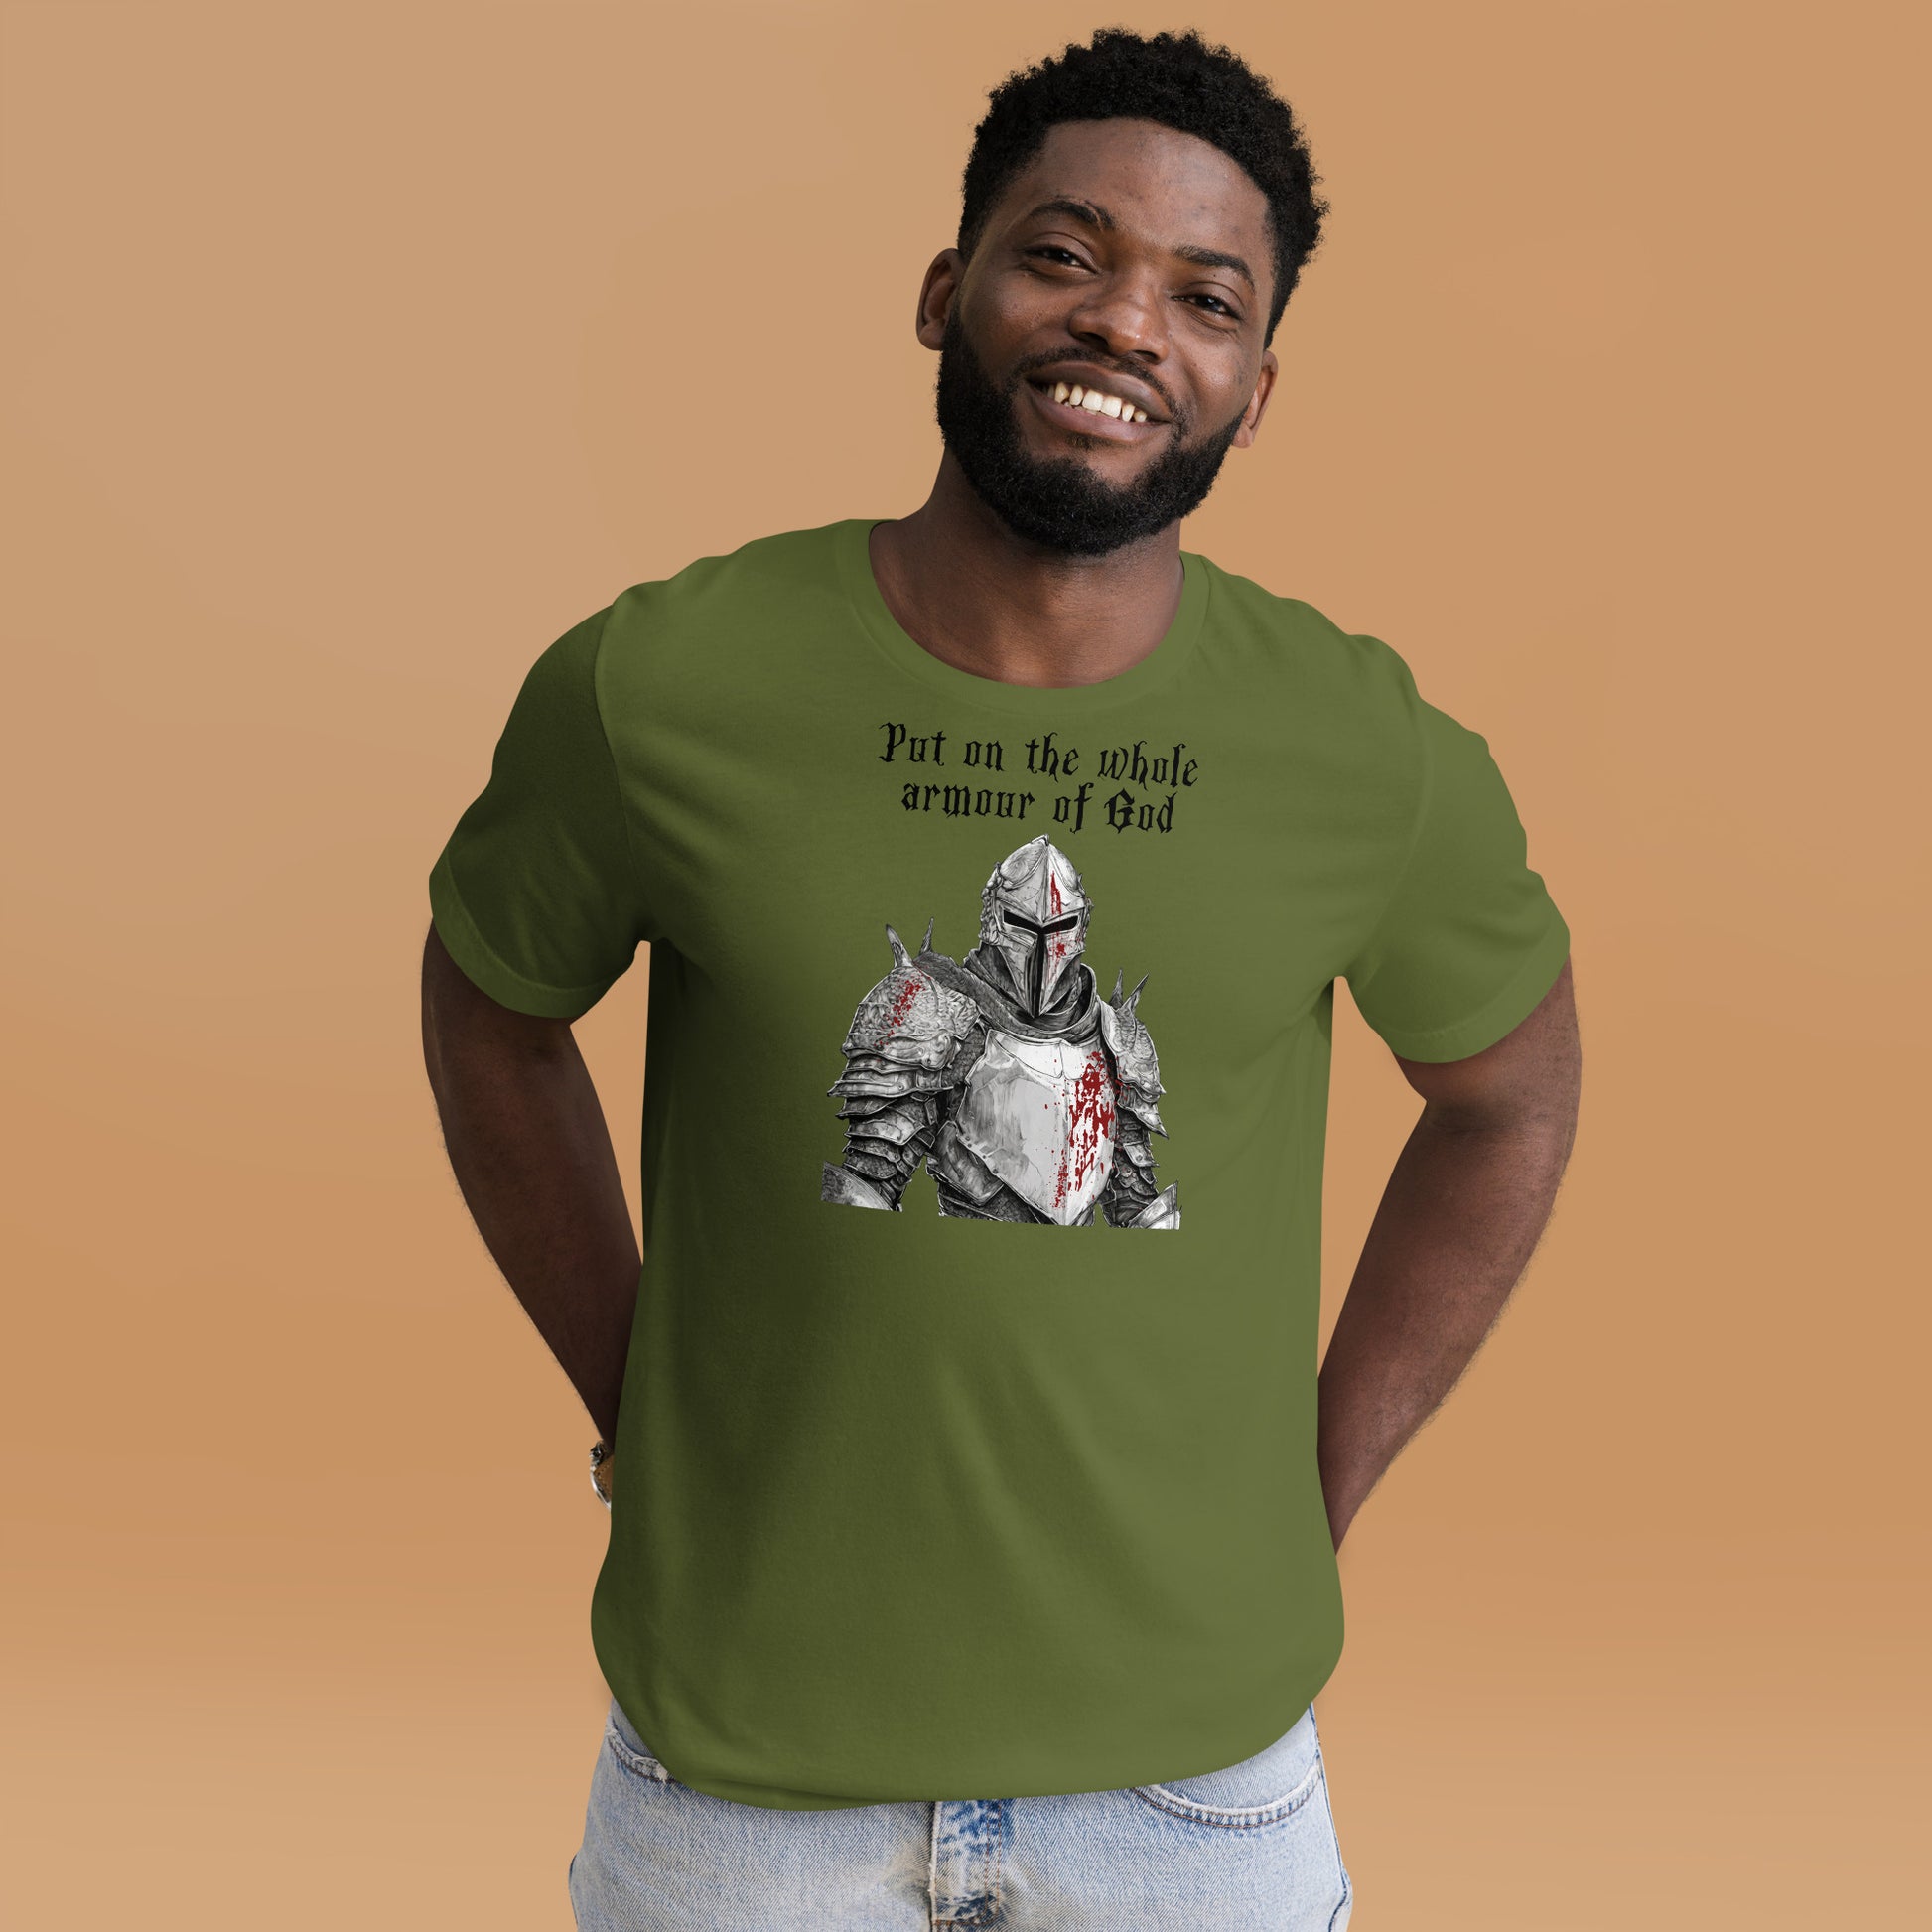 Armour of God Men's Christian T-Shirt